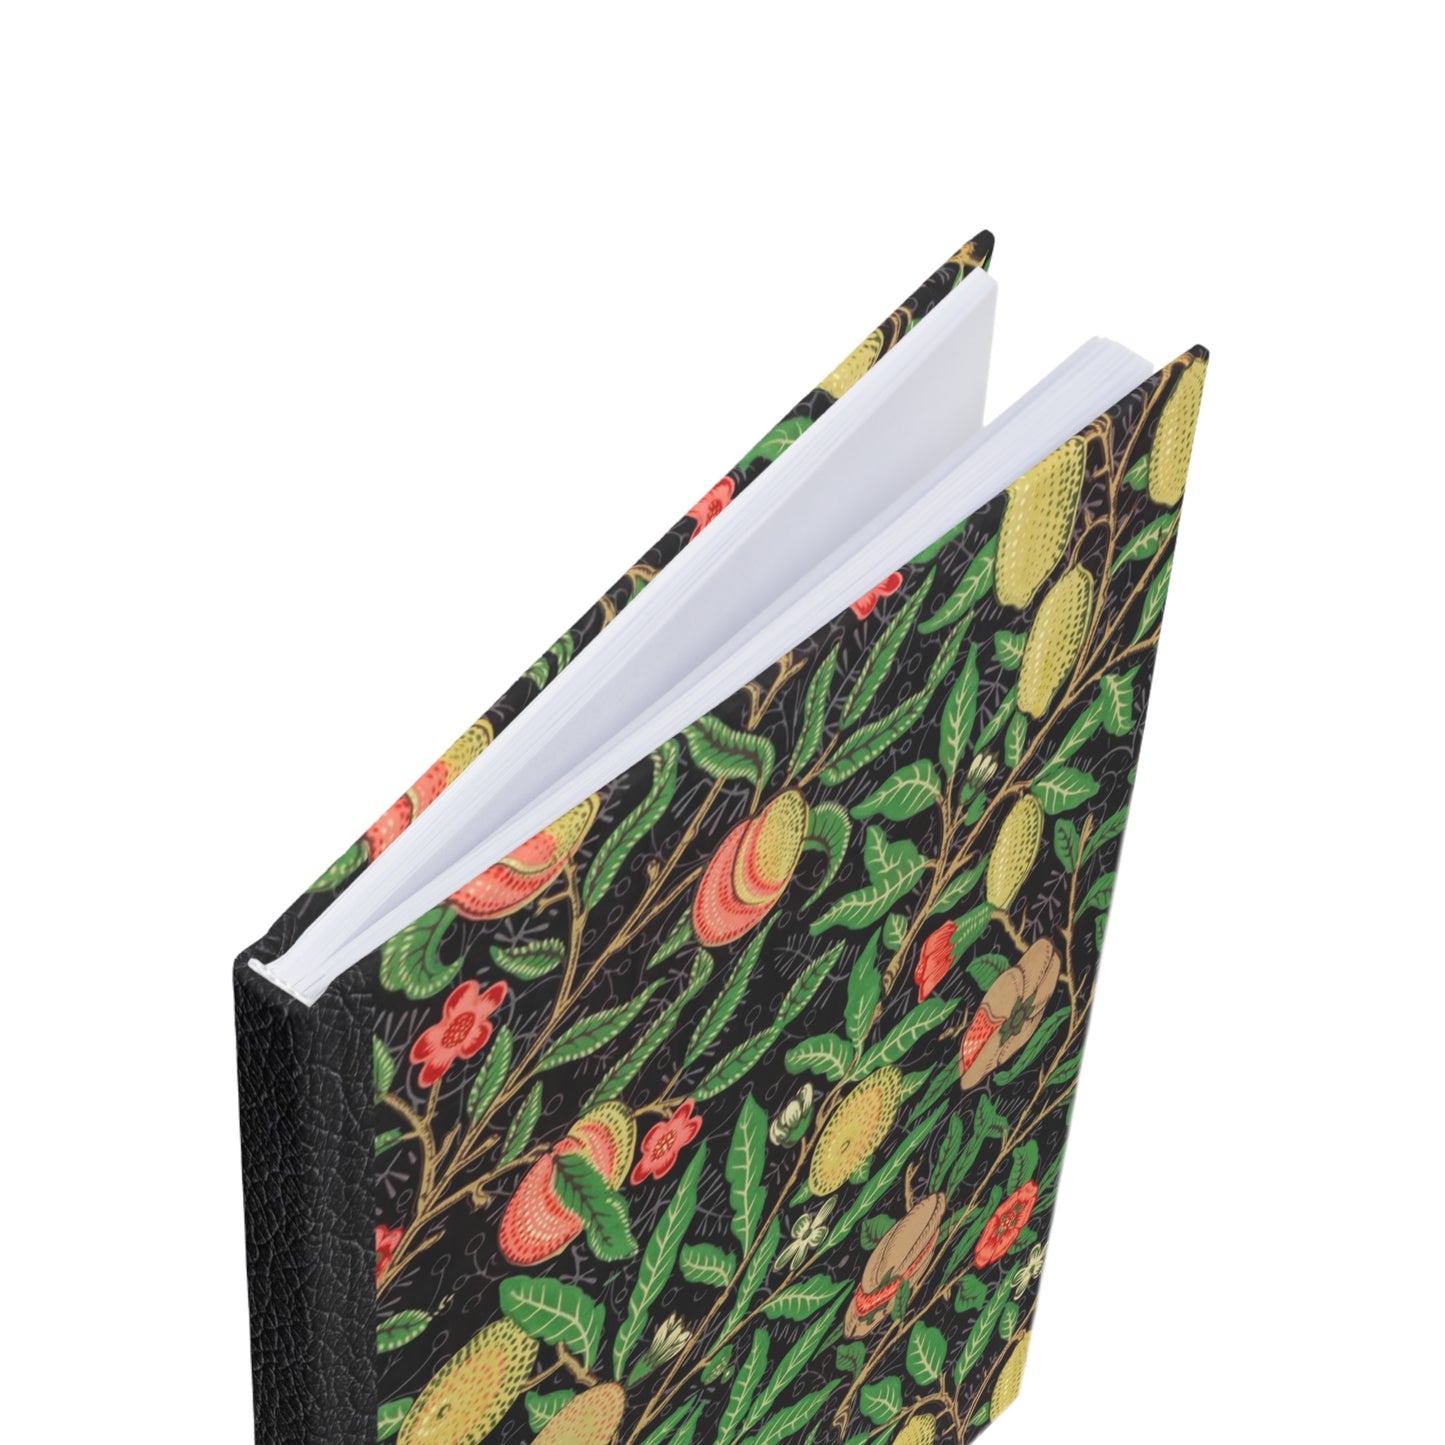 Fruit hardcover journal notebook